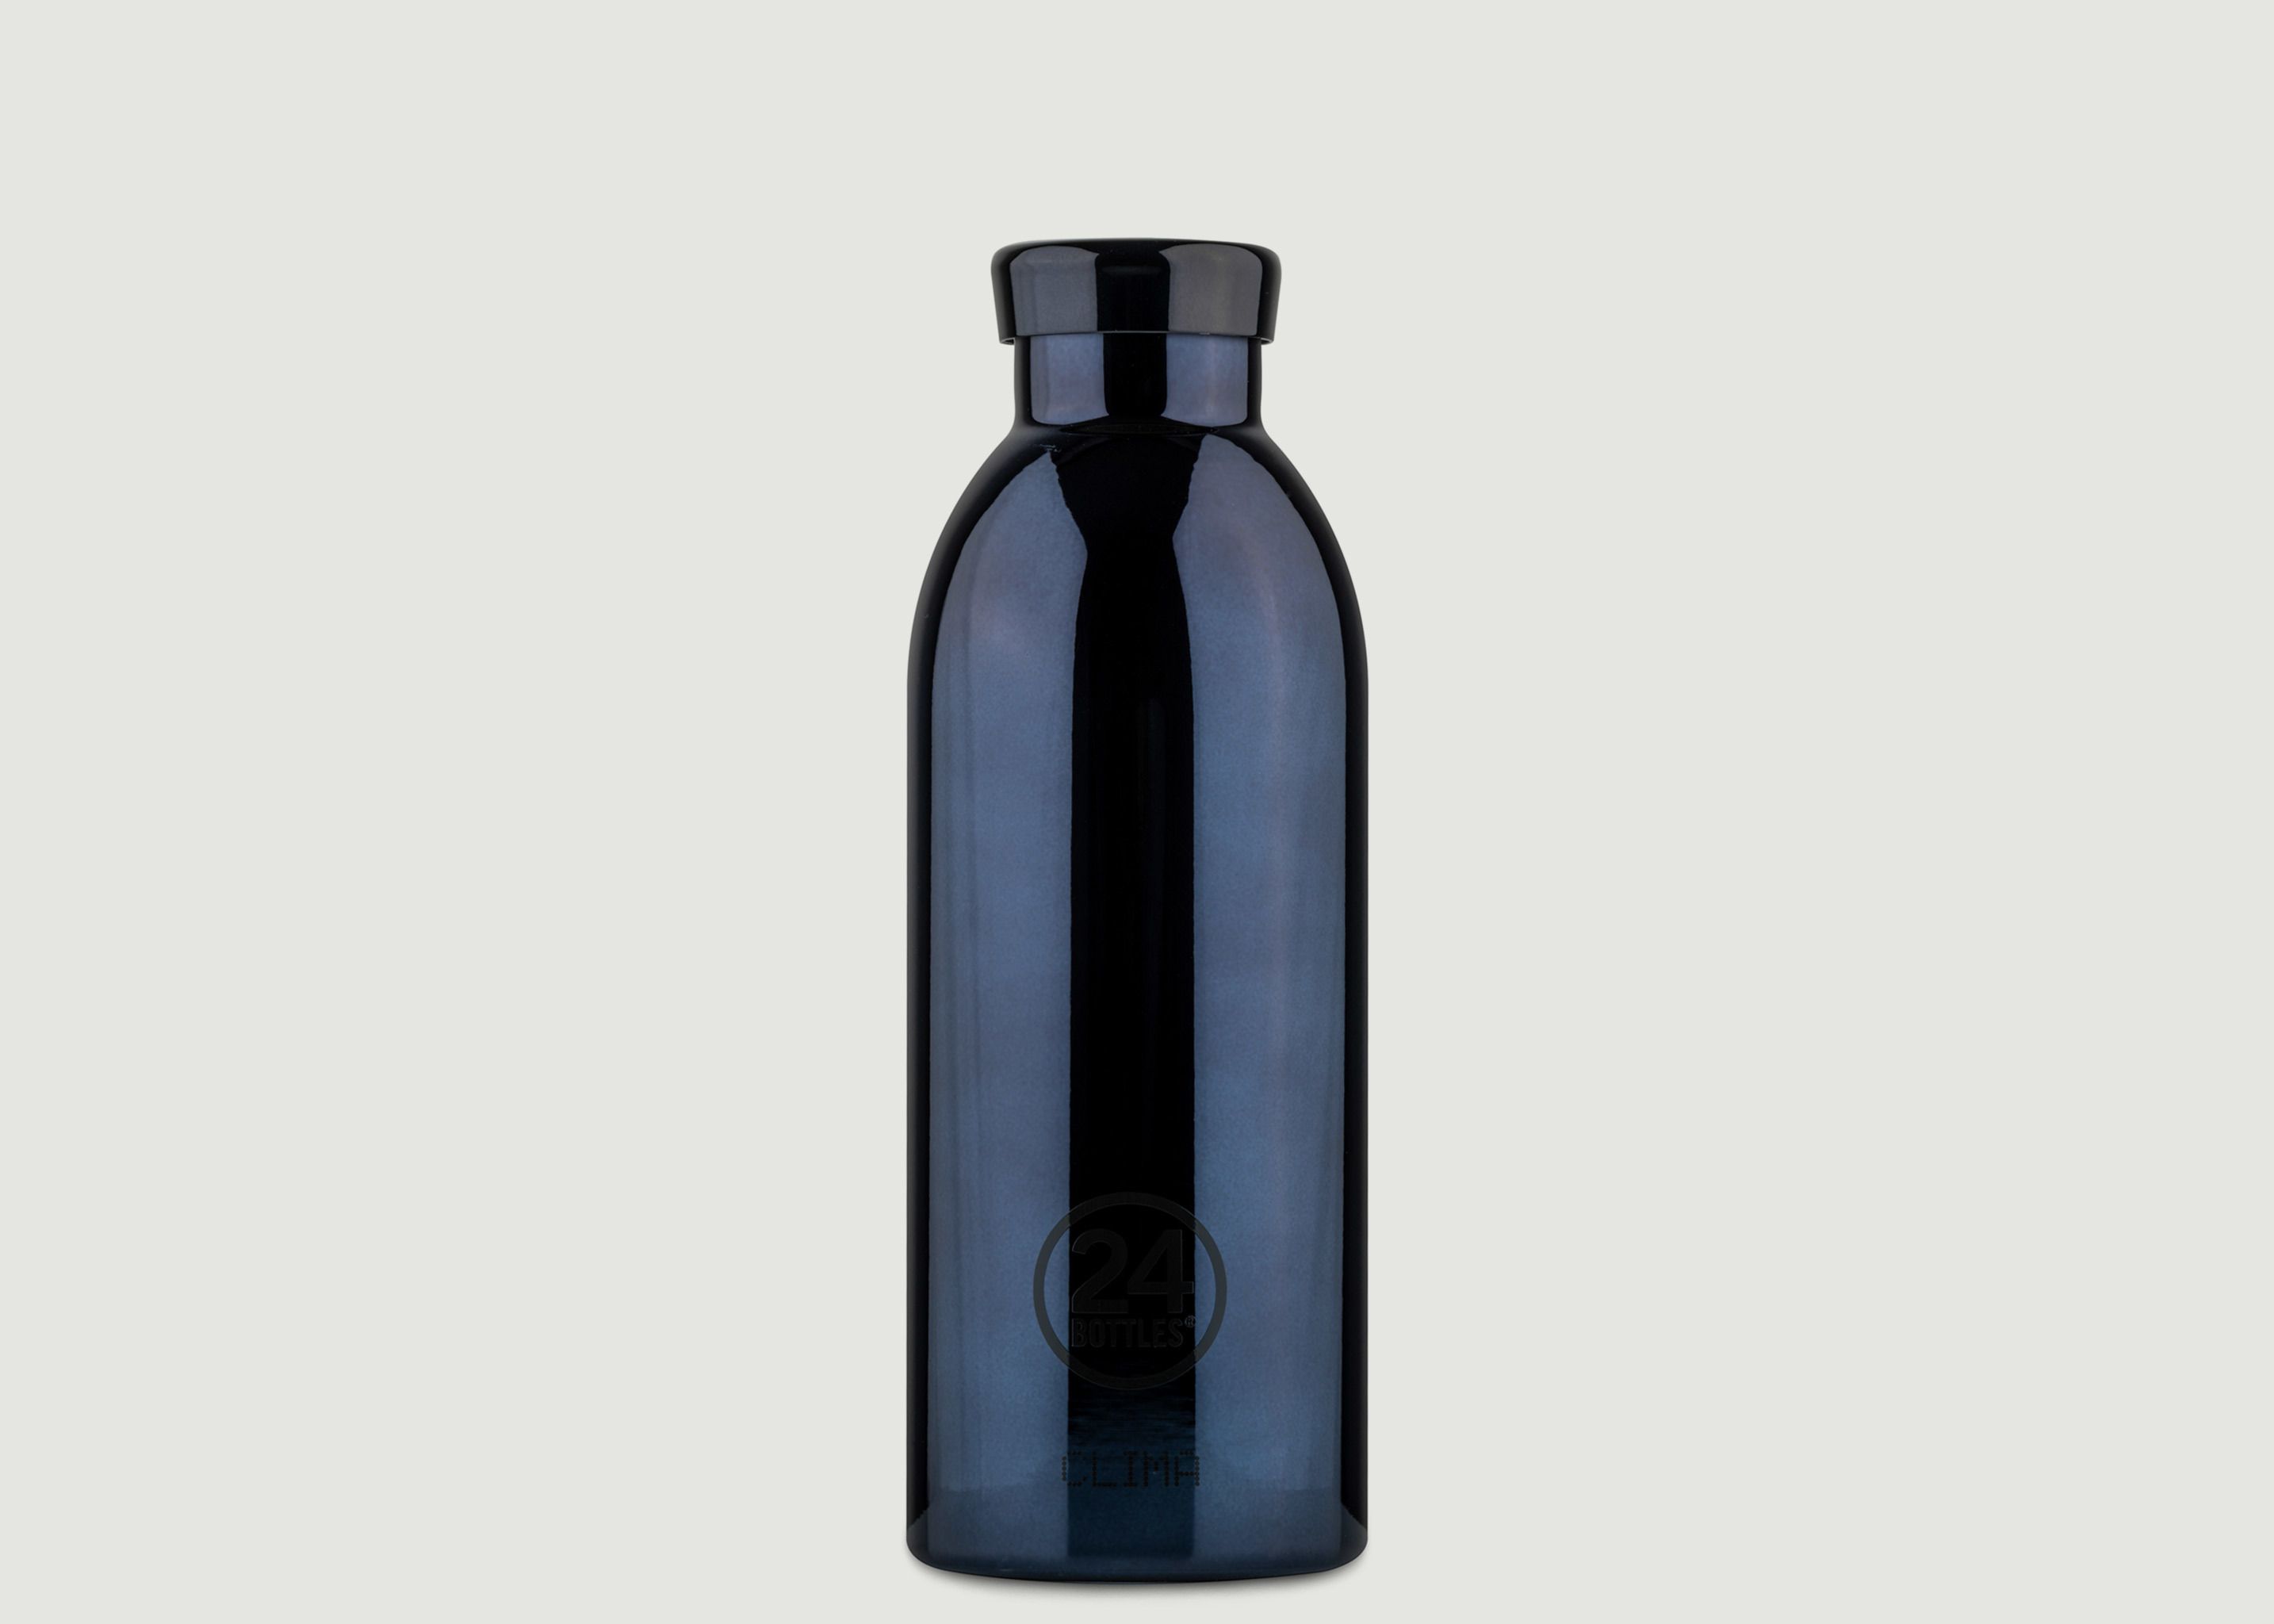 Clima Bottle 500ML Isotherme - 24 Bottles